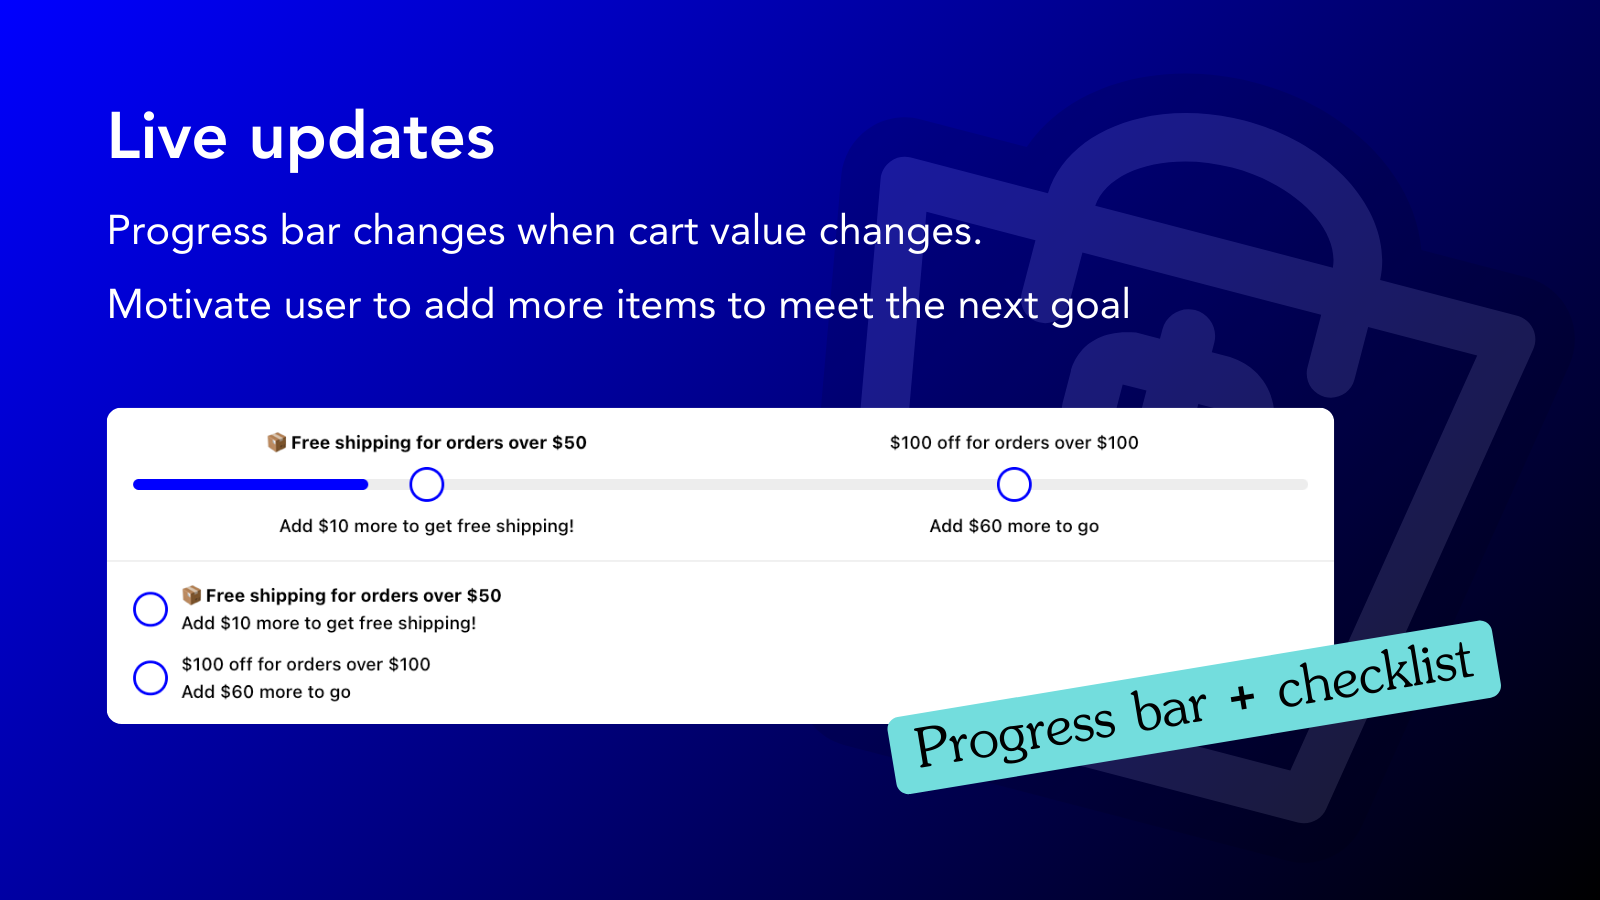 Show live updates using progress bar as cart value changes